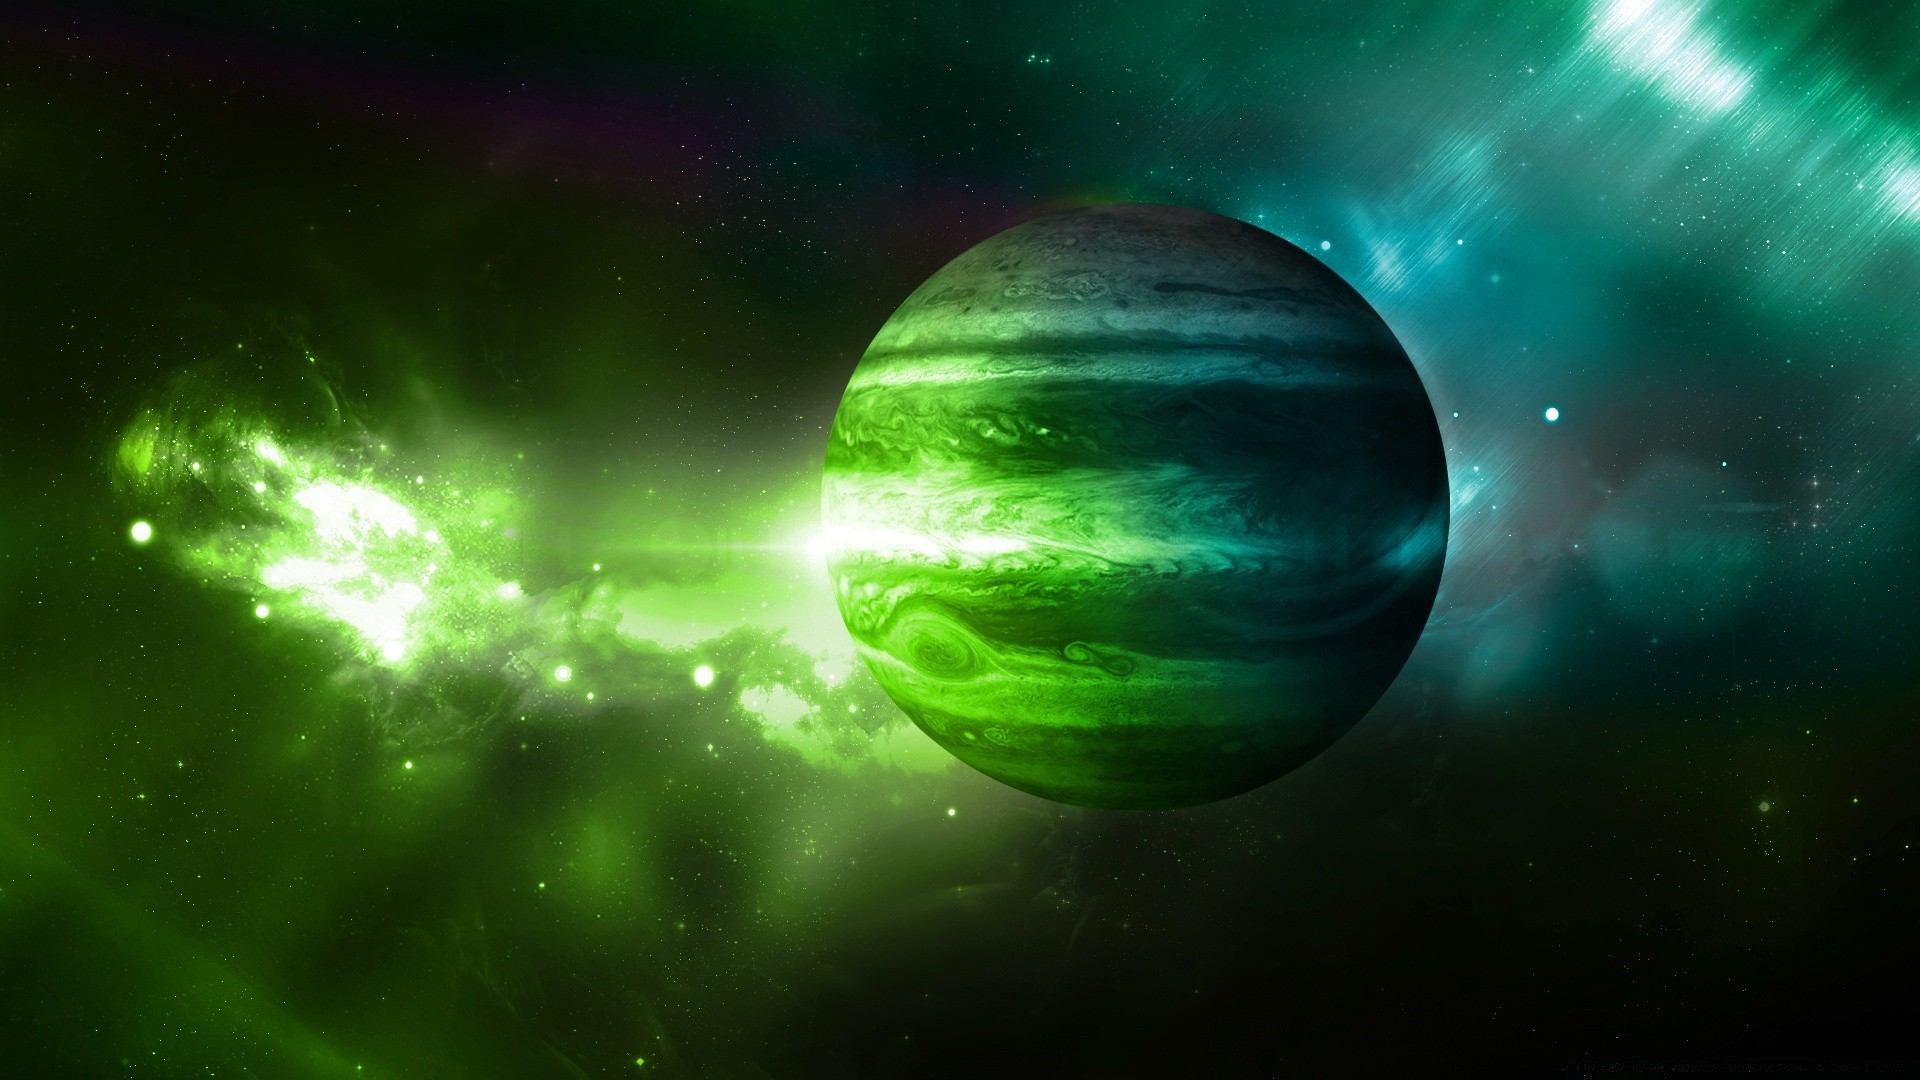 planets astronomy moon ball-shaped space planet exploration galaxy science blur fantasy bright dark shining